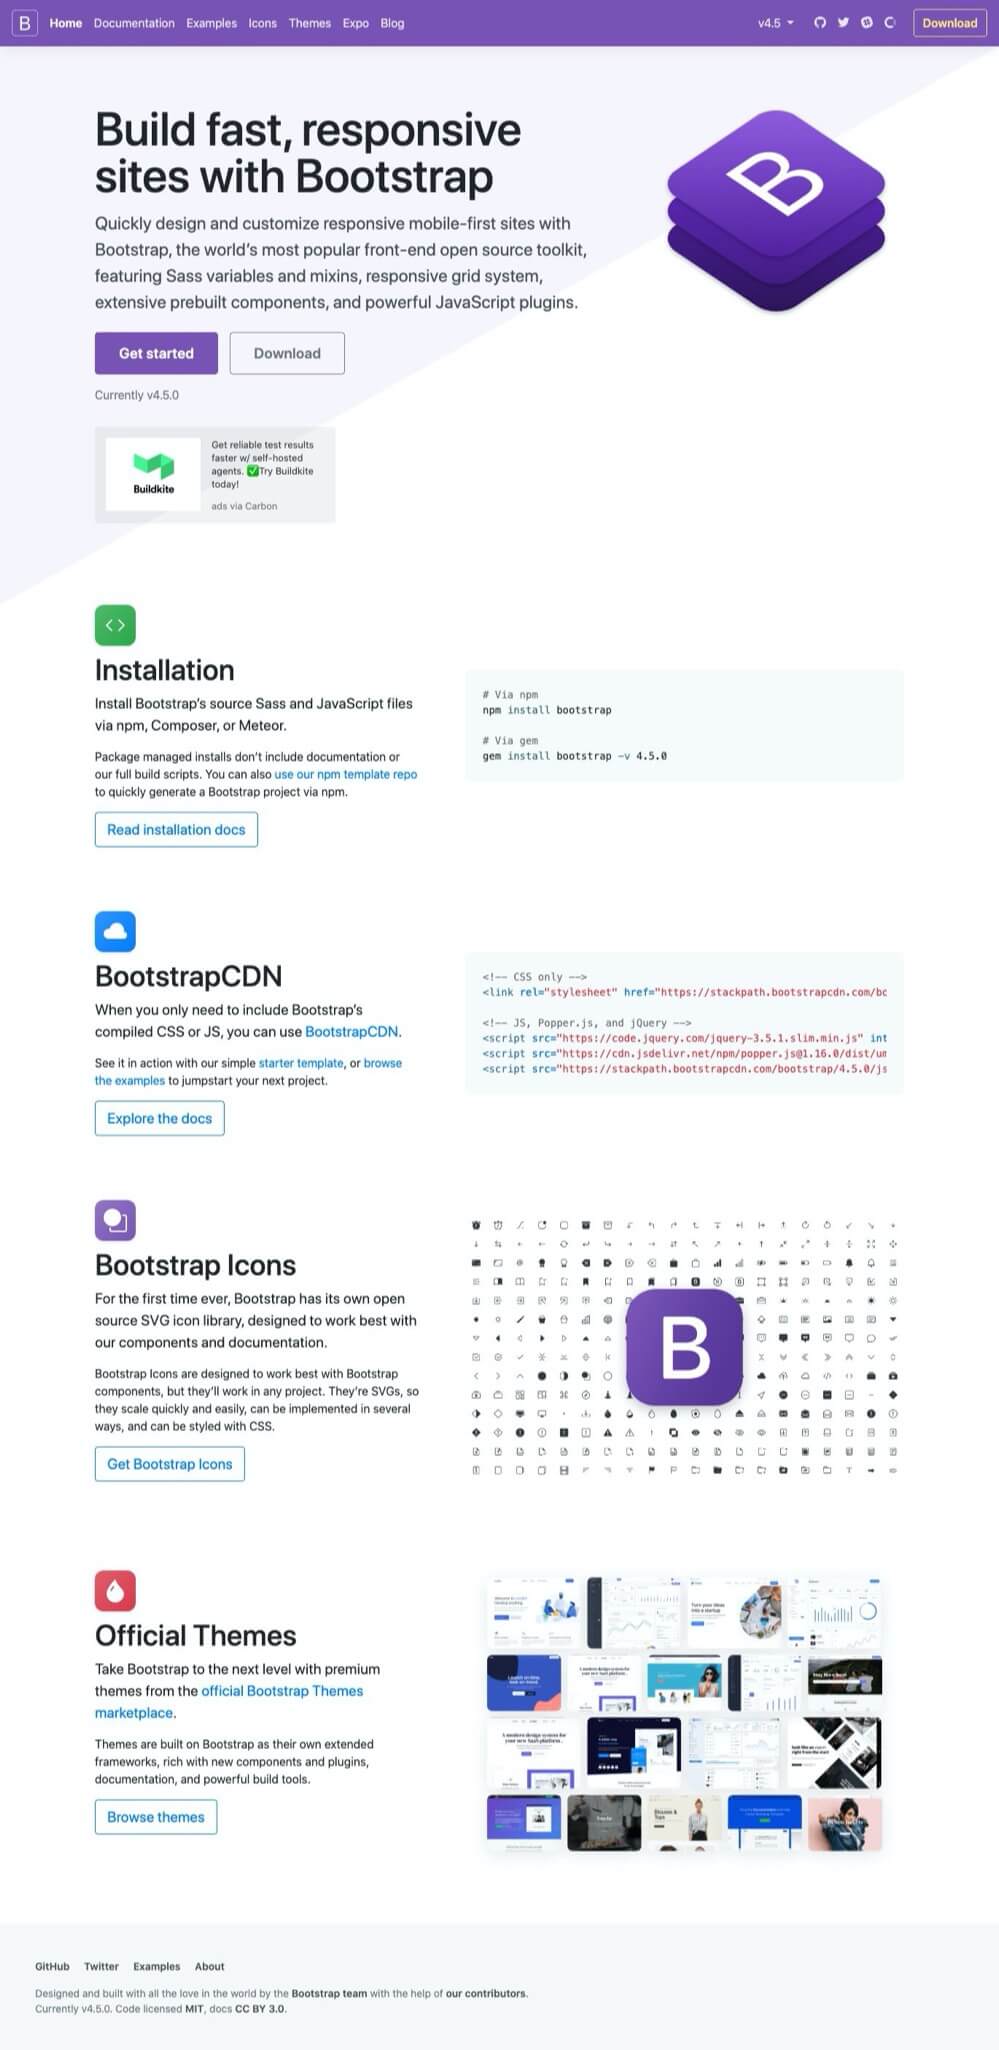 The Bootstrap framework